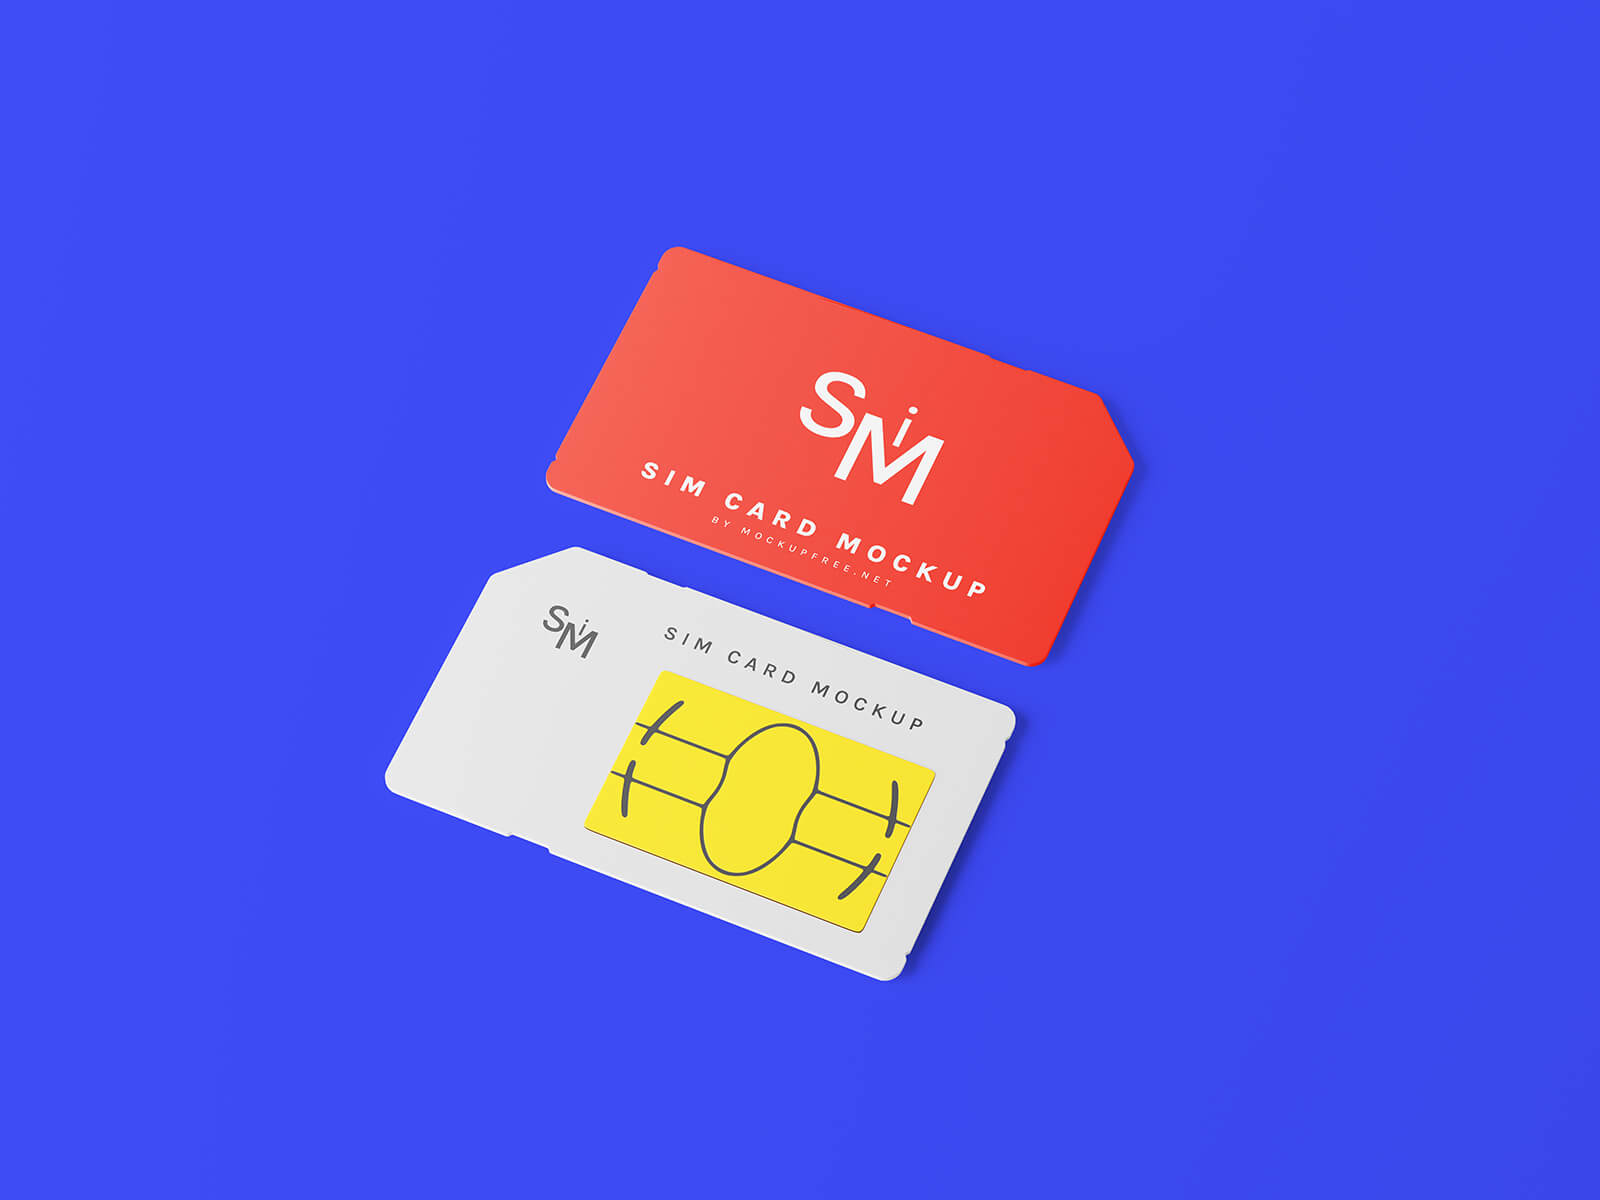 Free Mobile SIM Card Mockup PSD